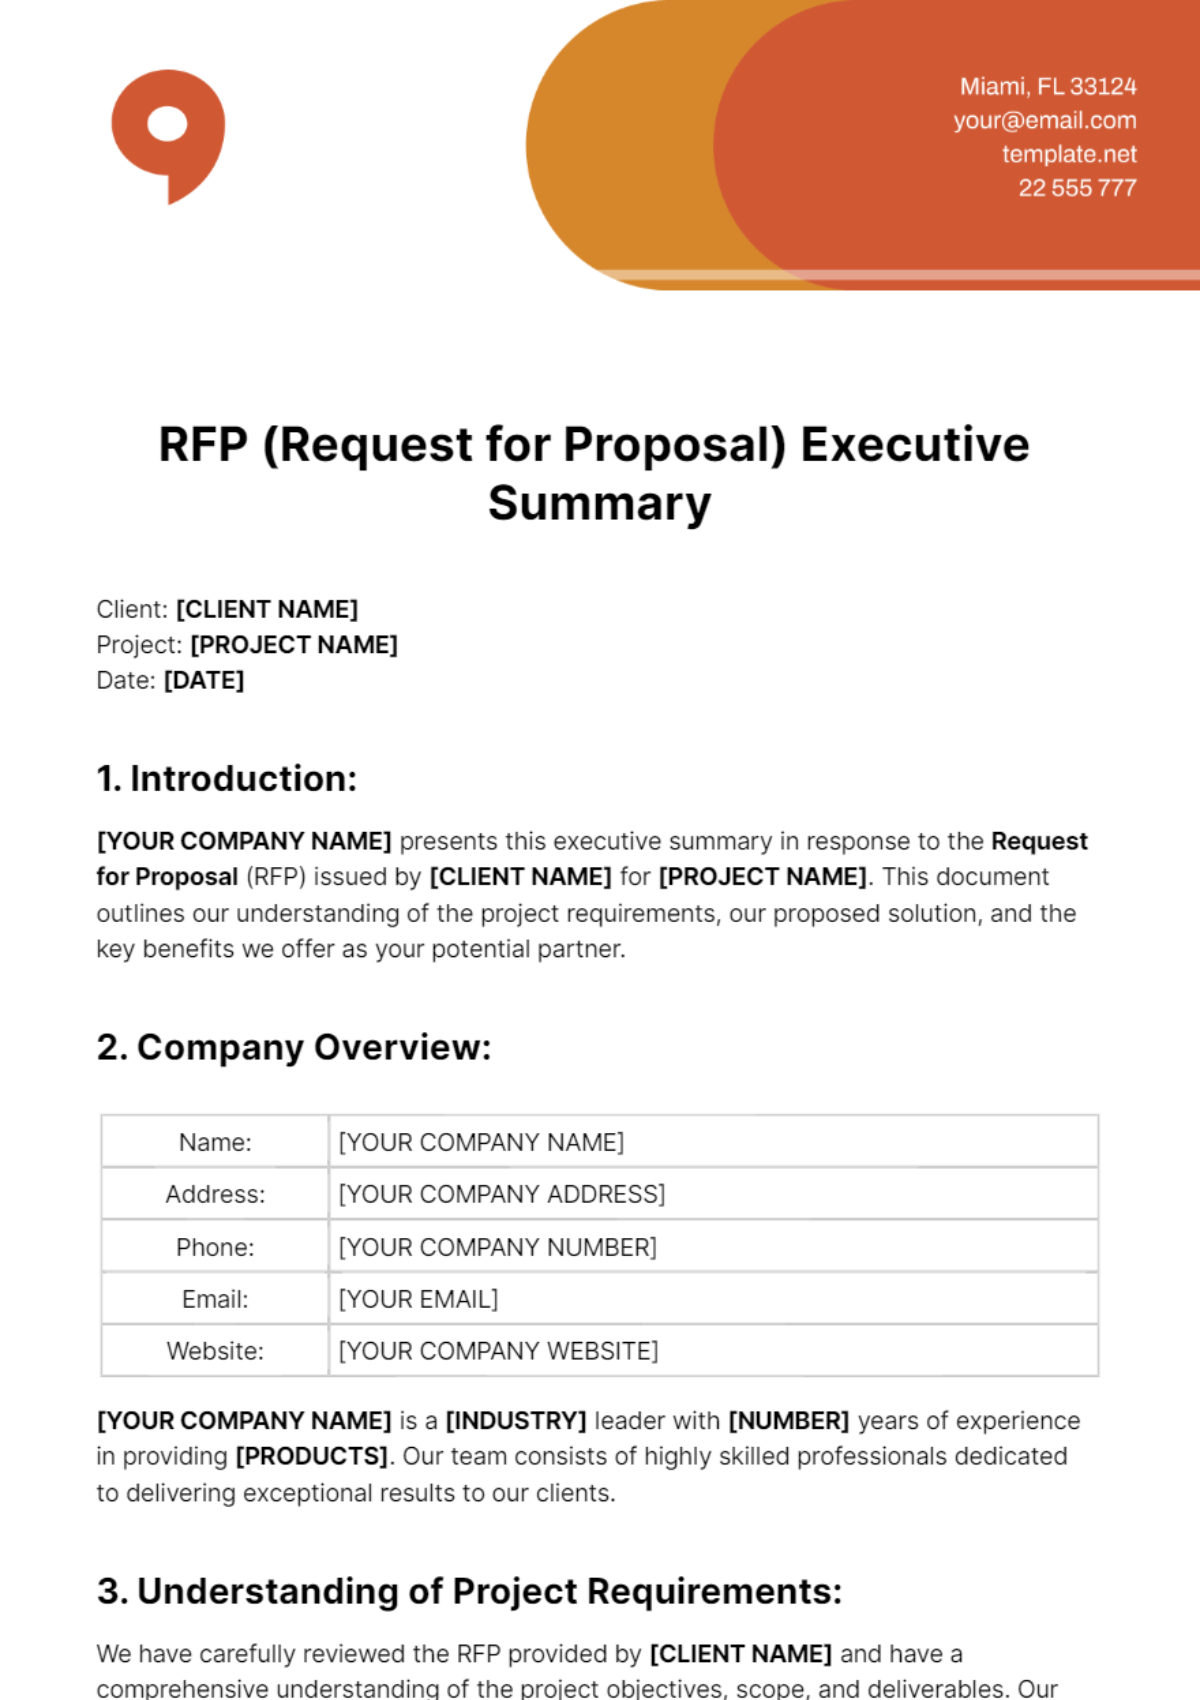 RFP Executive Summary Template